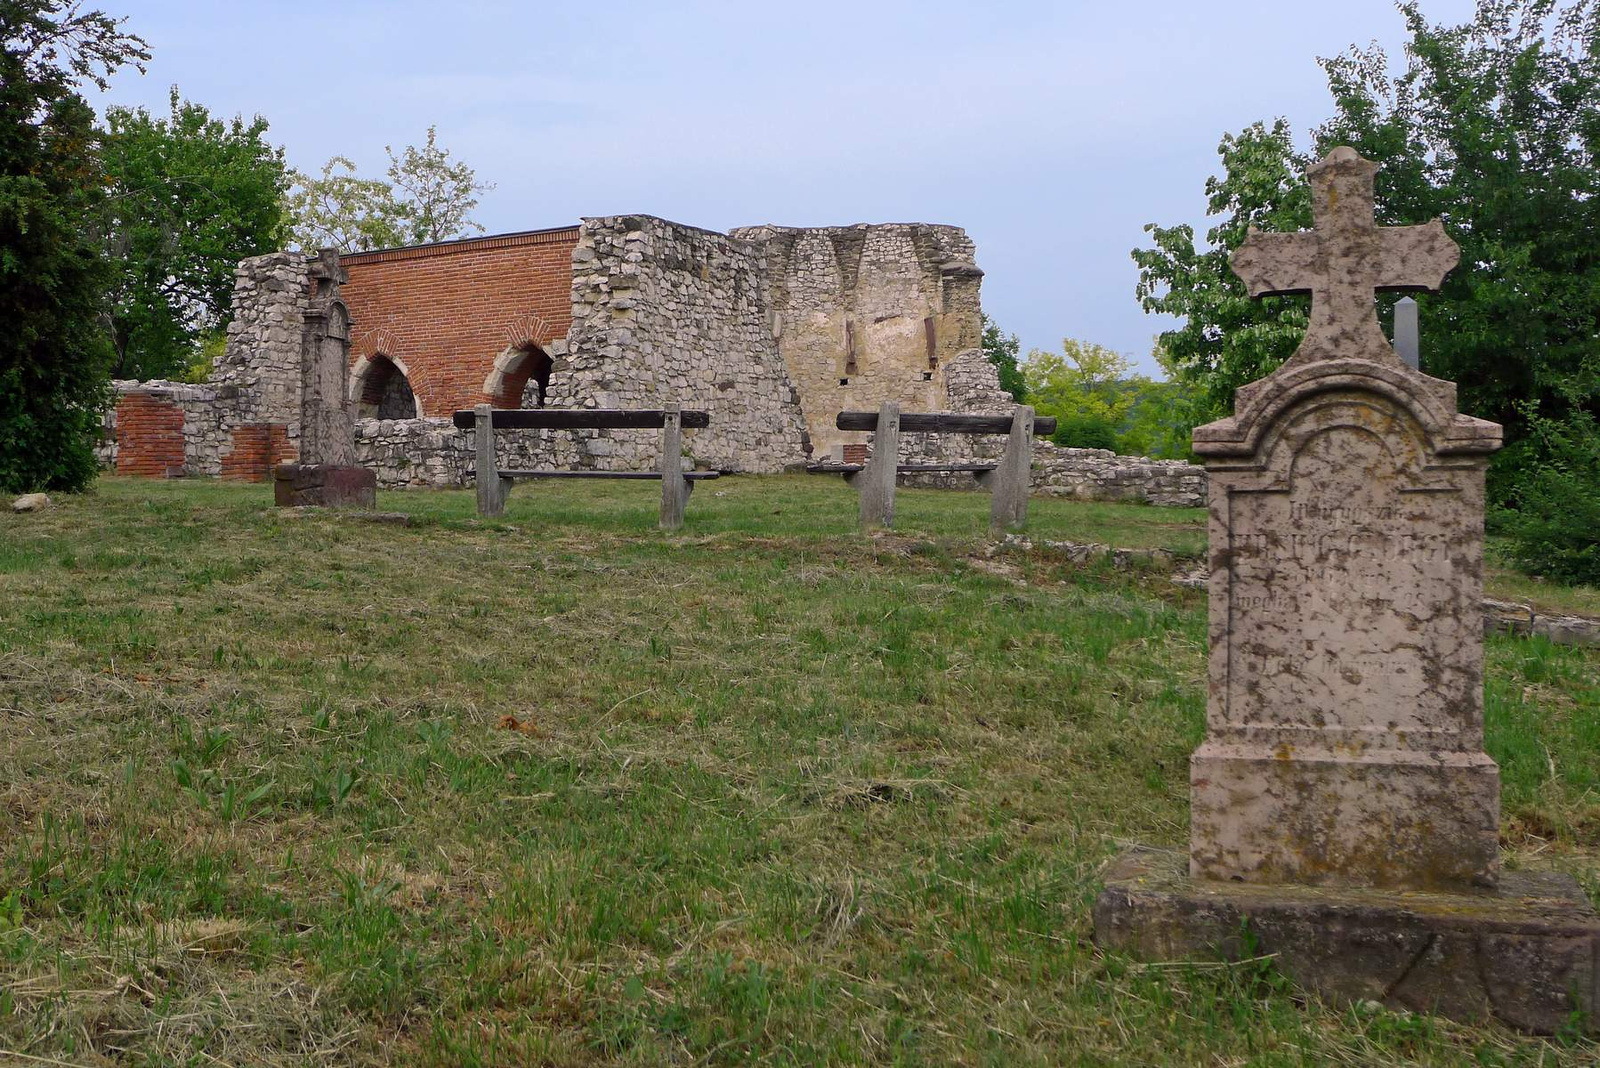 Papsokai-Siskei templomrom és temető II.